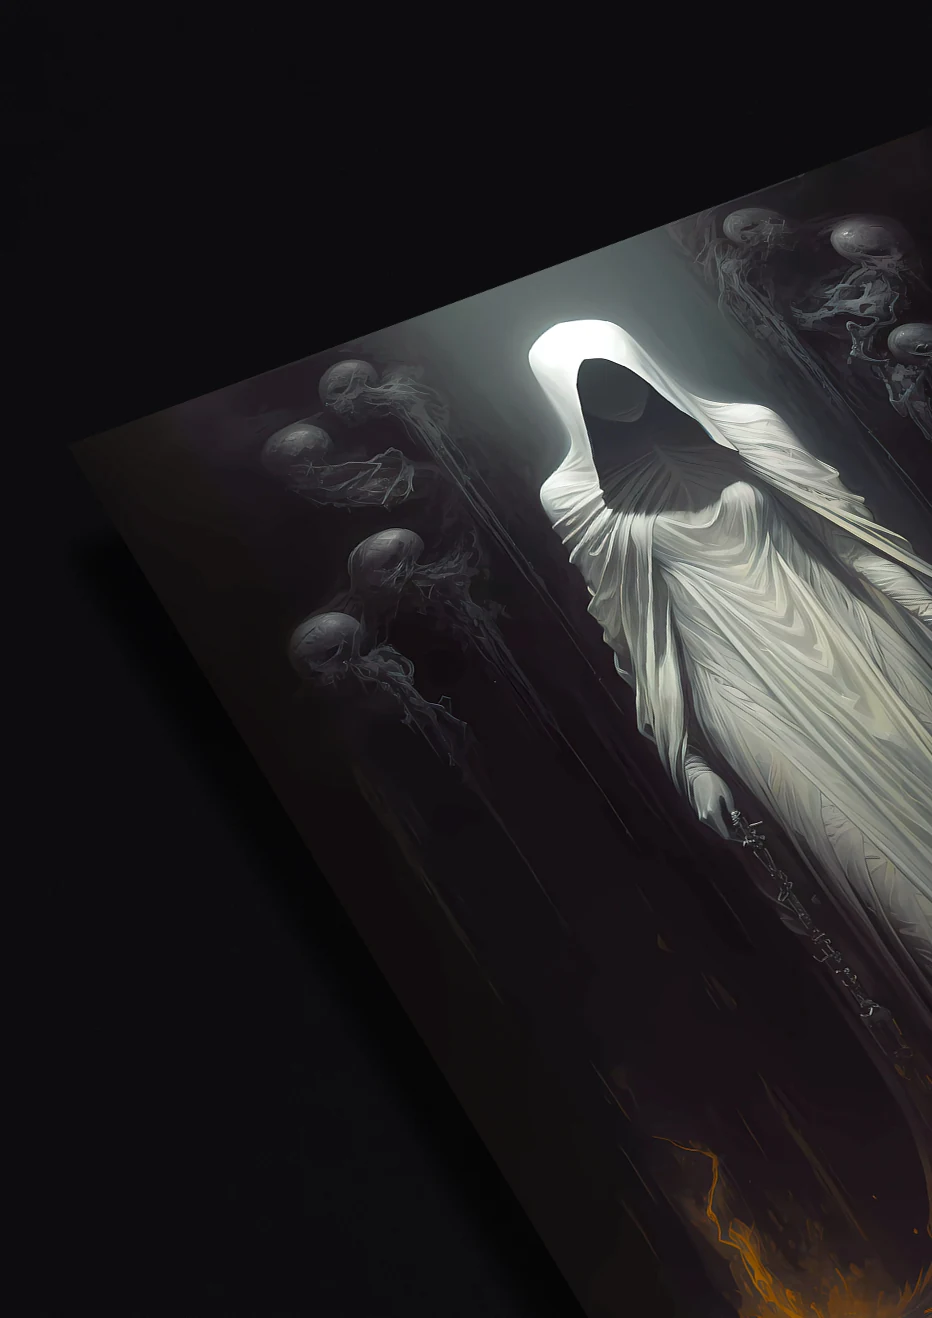 Shadowy figure amidst darkness in "Bound by Shadows" artwork.